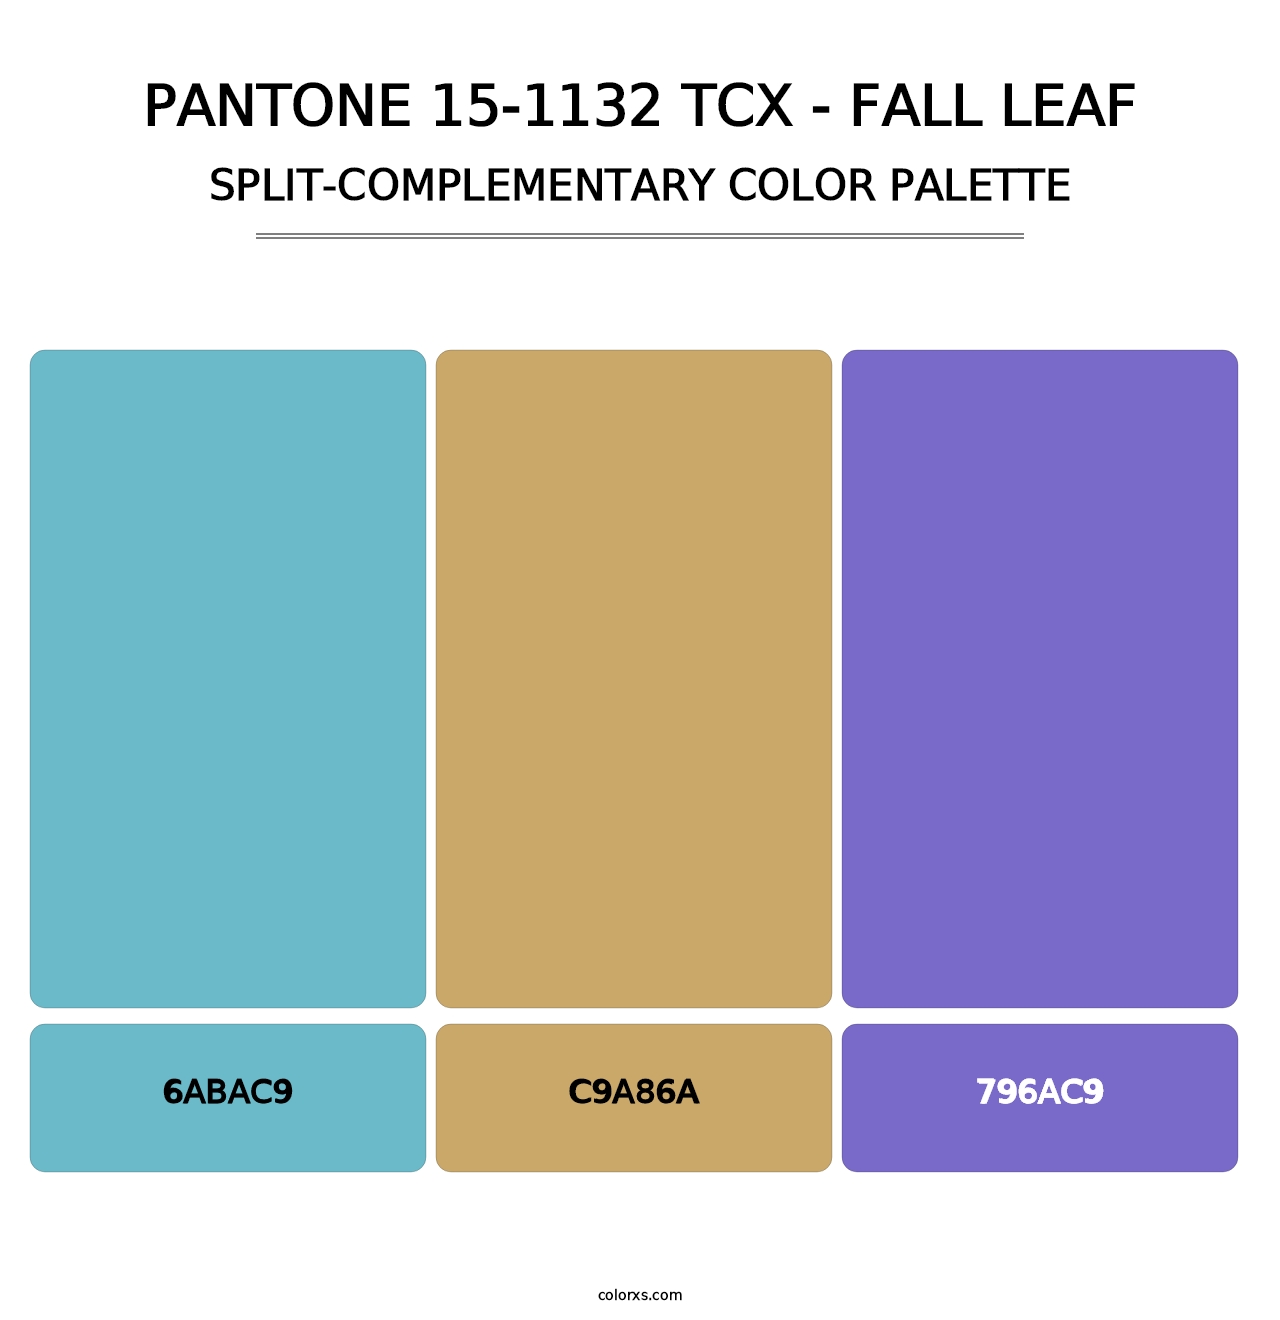 PANTONE 15-1132 TCX - Fall Leaf - Split-Complementary Color Palette